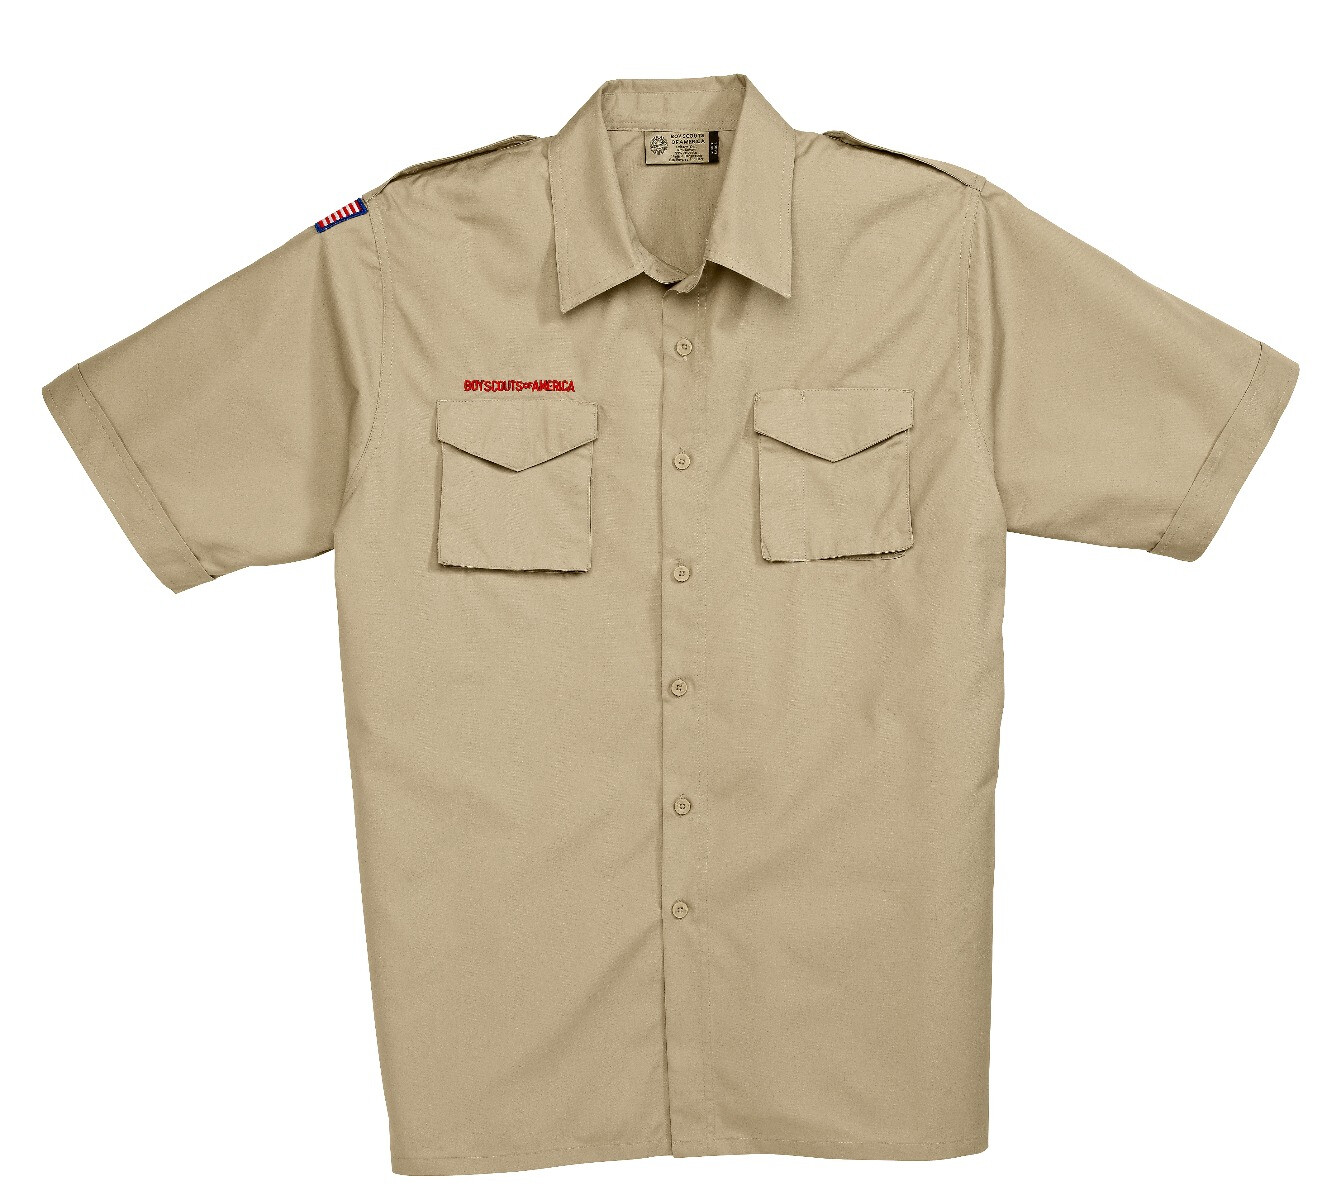 BSA Men's Adult Tan Polyester Shirt